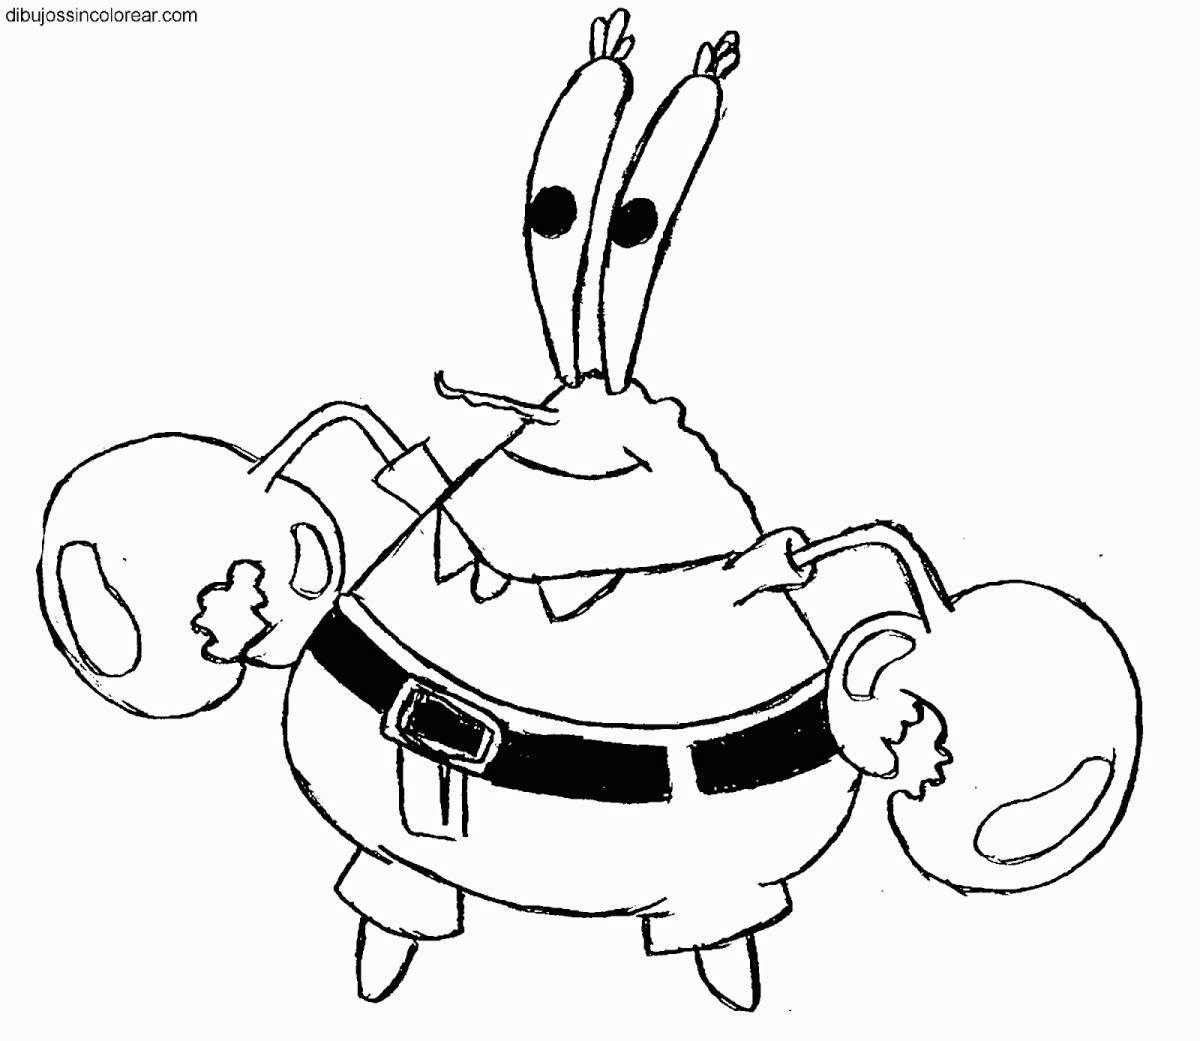 Coloring page happy krusty krab